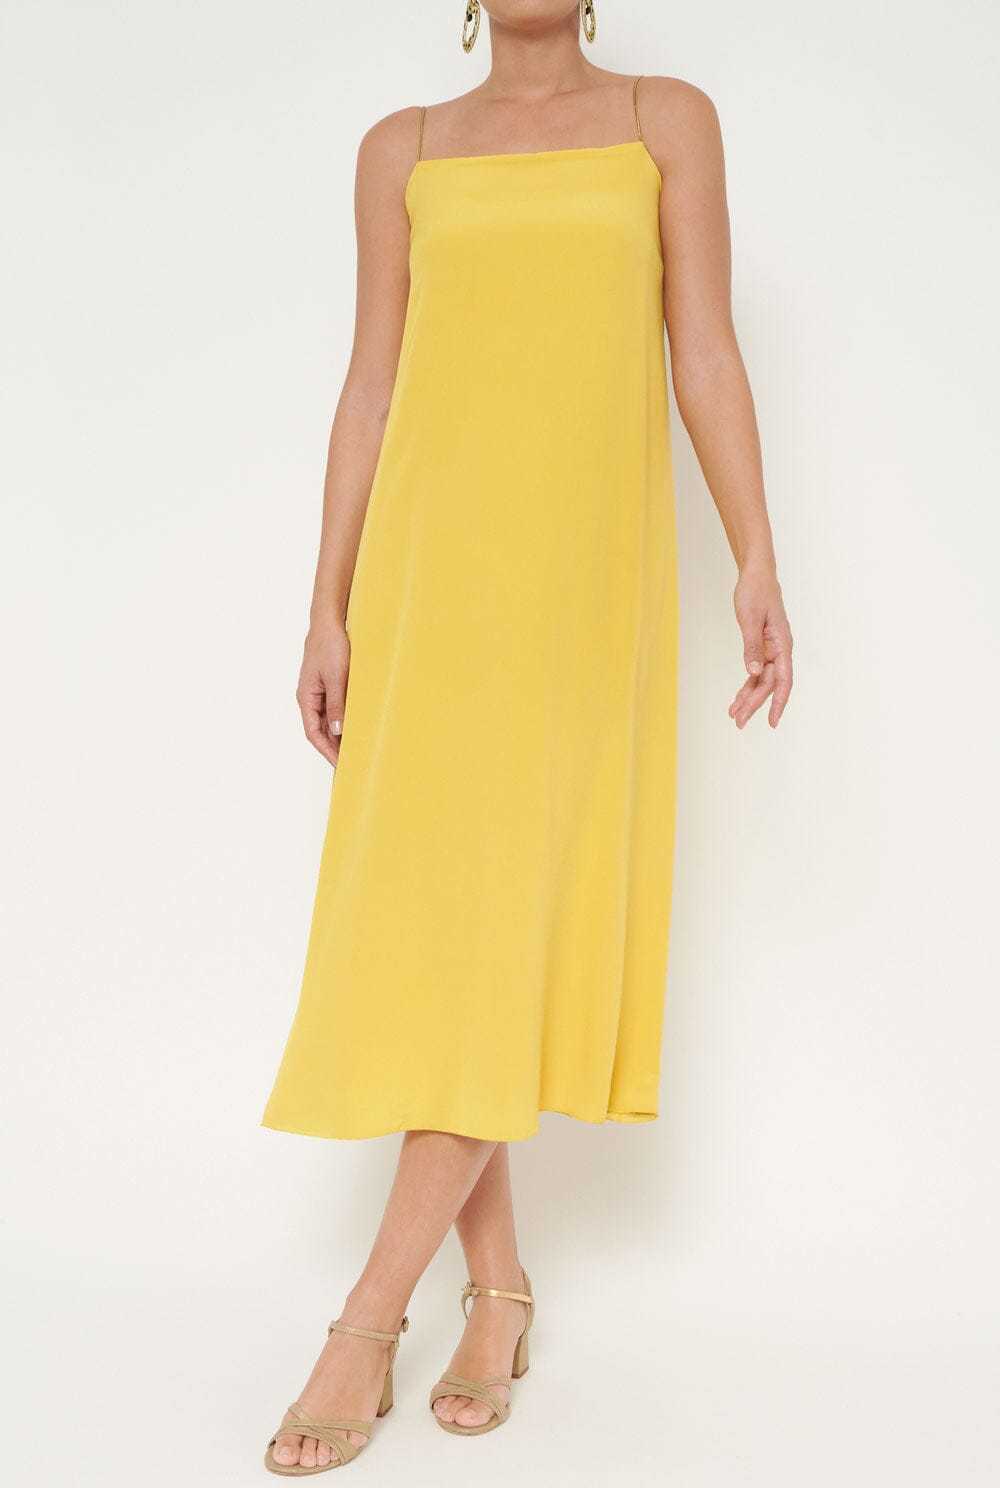 Vestido amarillo de tirantes fino de seda de Atelier Aletheia (425 euros).